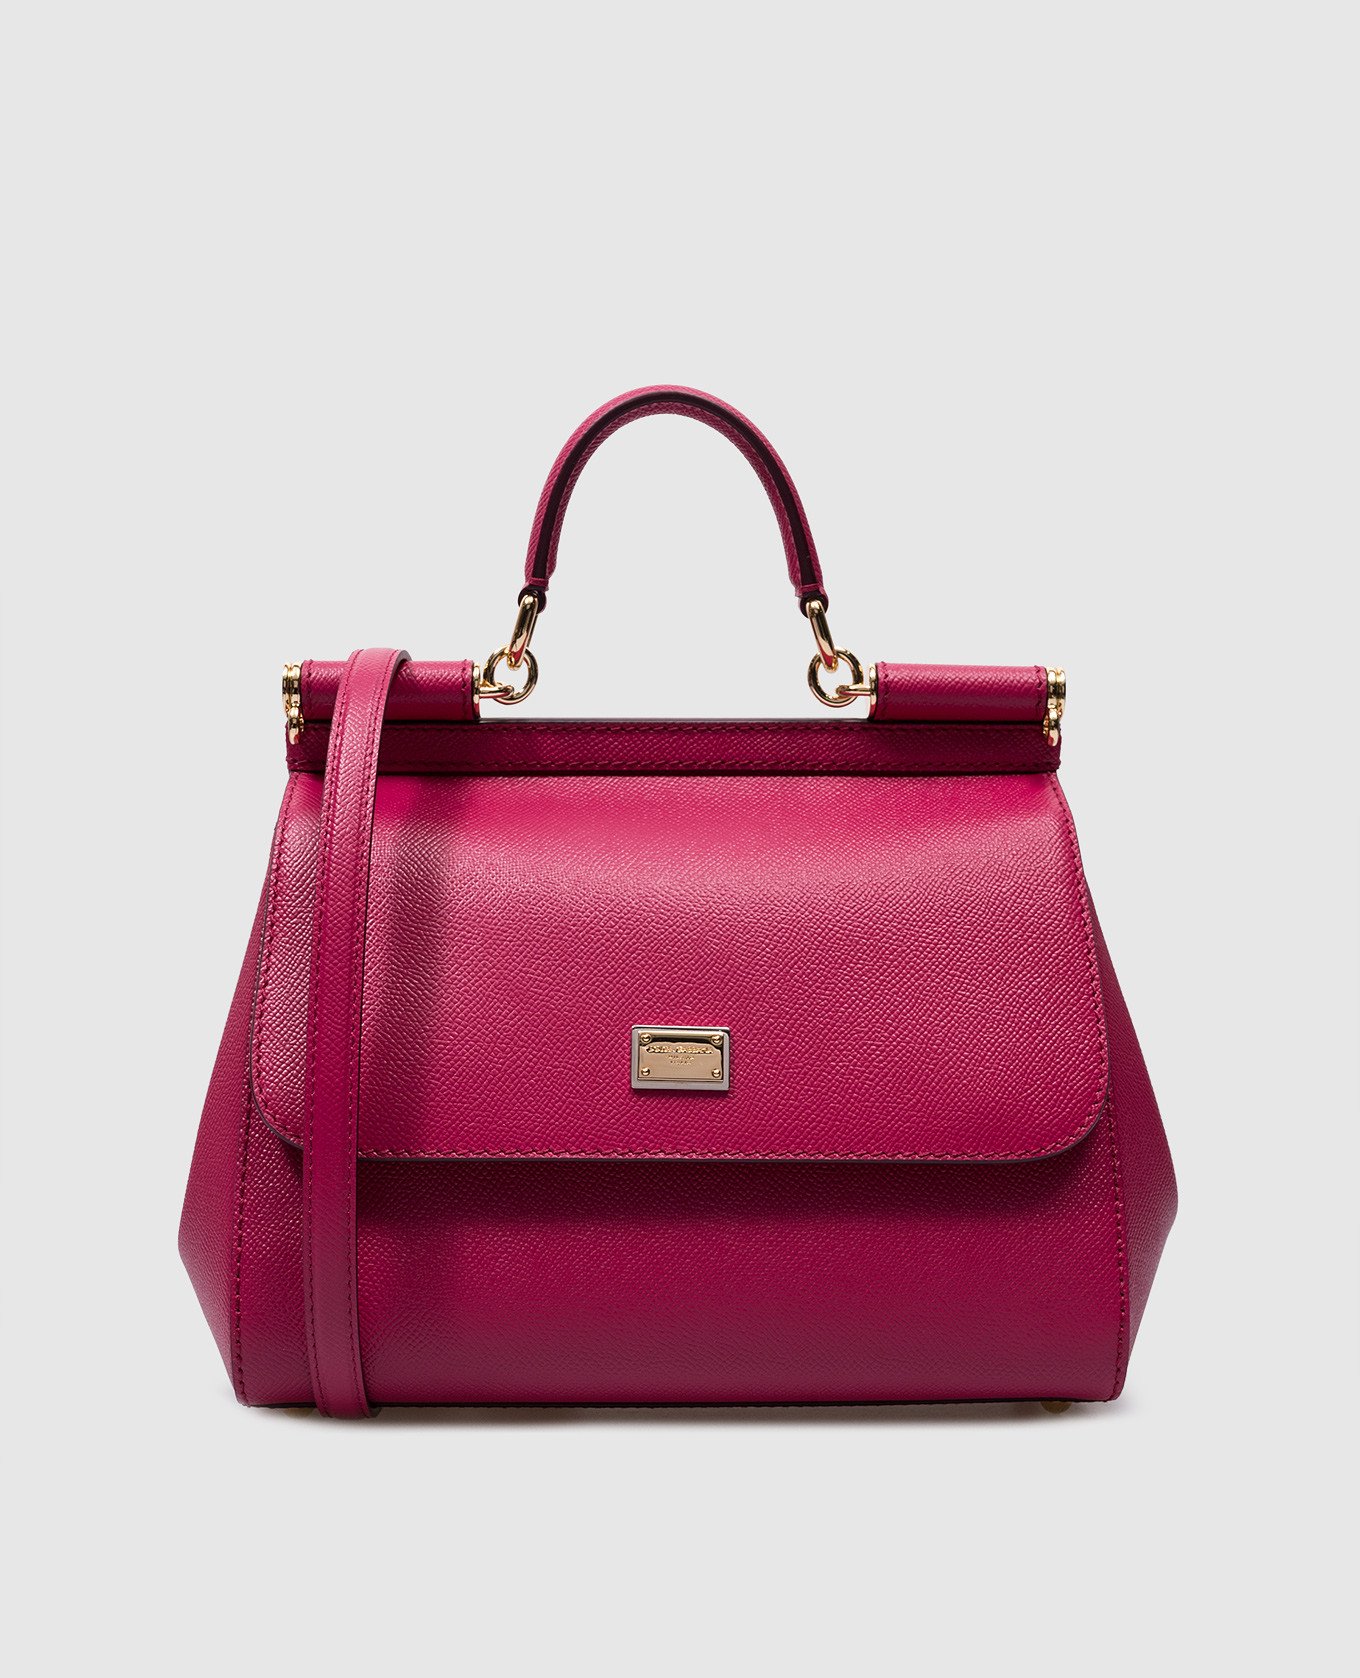 SICILY pink leather satchel bag with metal logo